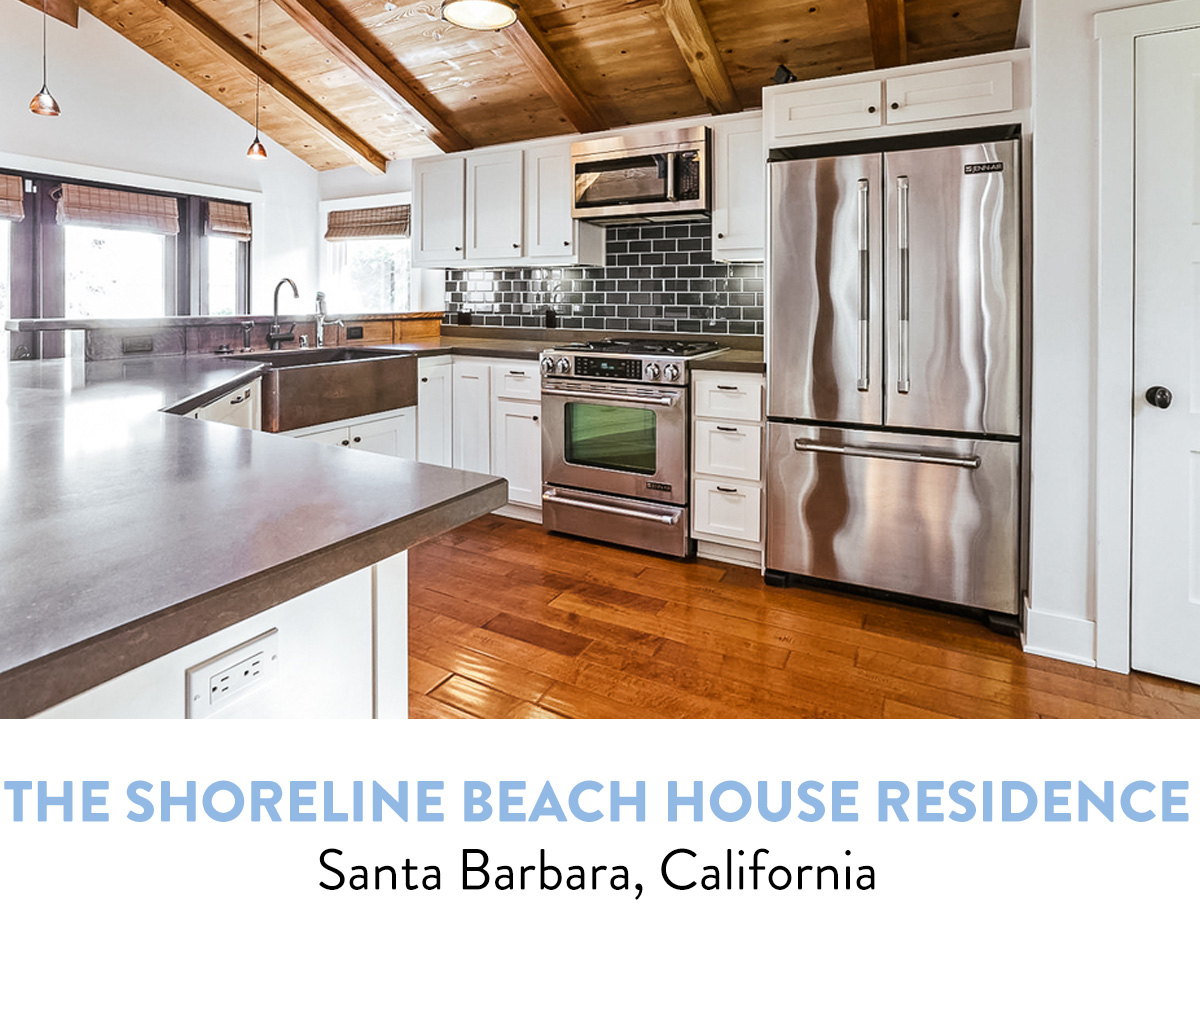 The Shoreline Beach House Residence